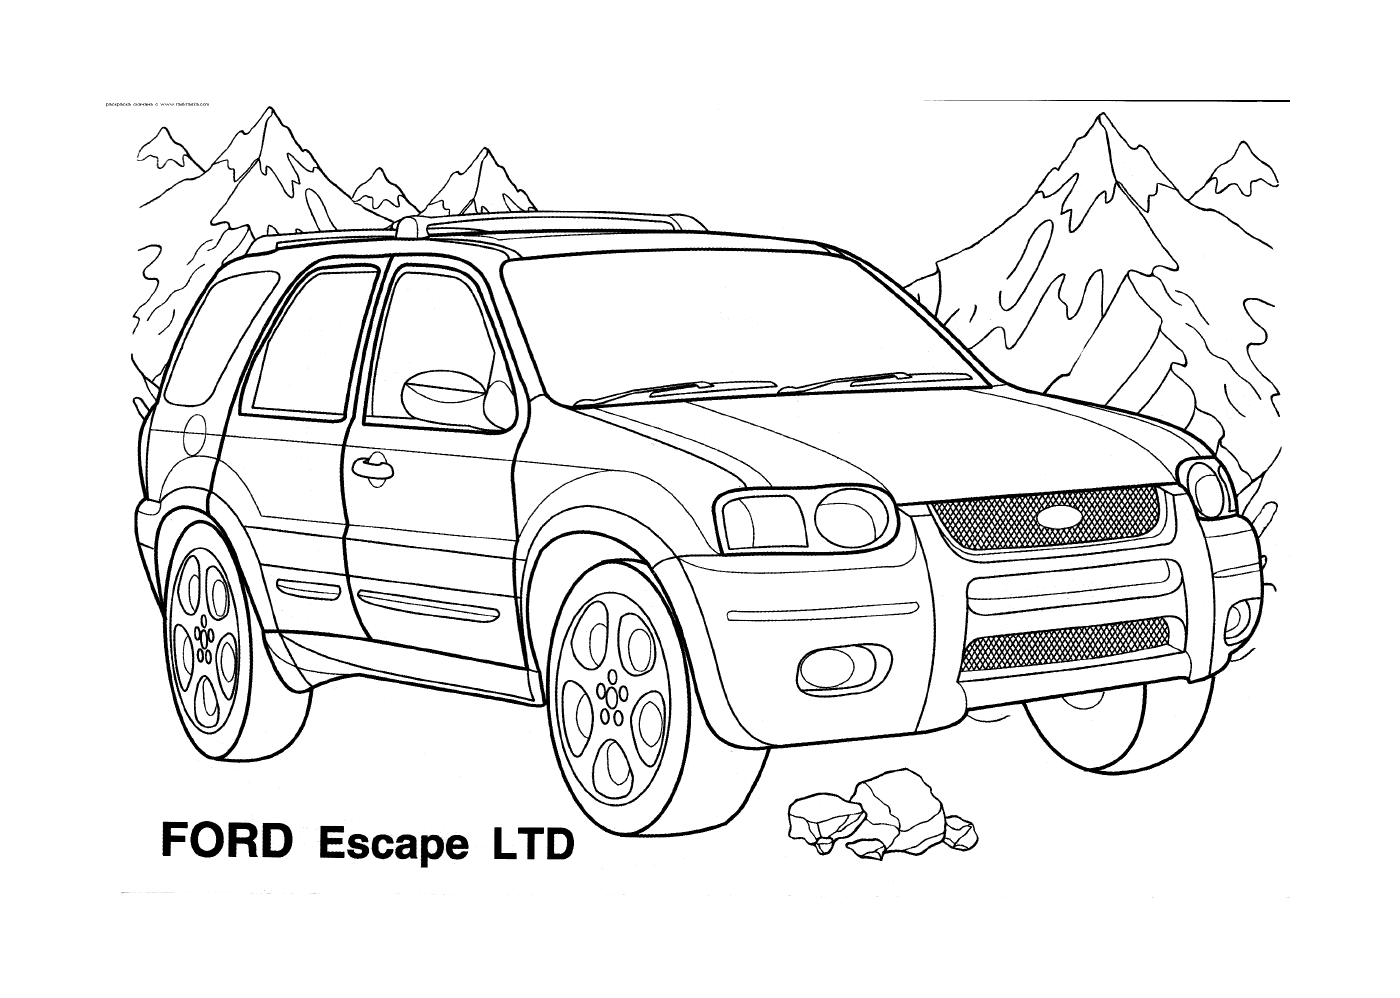  Ford Escape LTD in den Bergen 